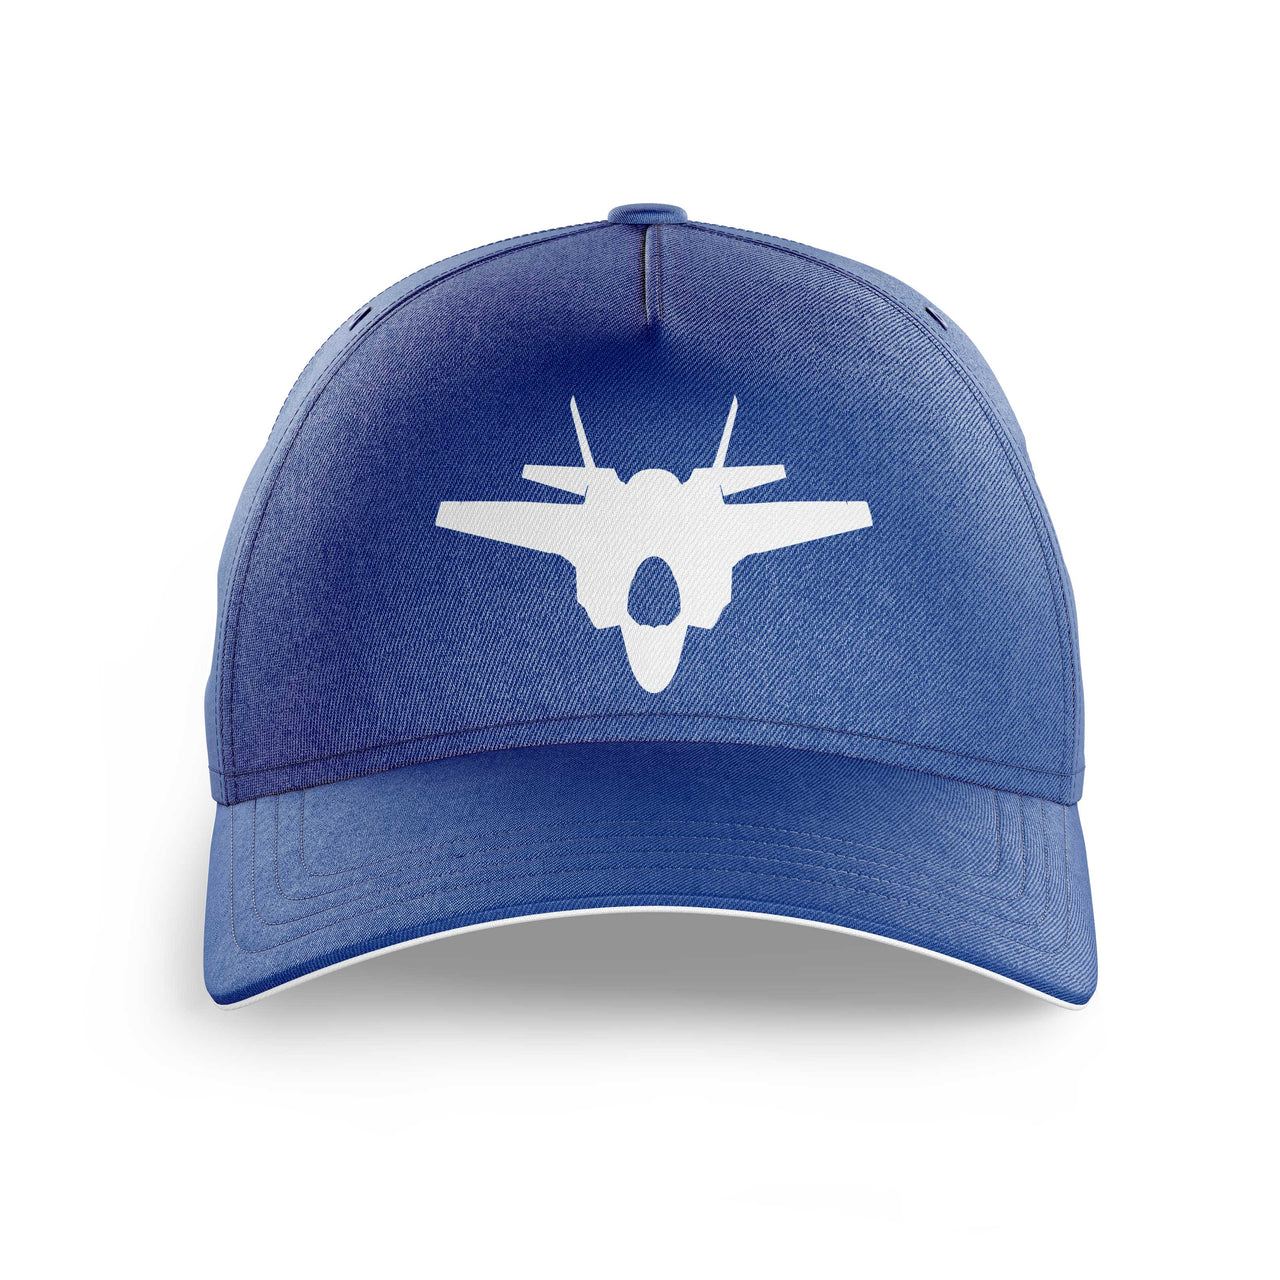 Lockheed Martin F-35 Lightning II Silhouette Printed Hats